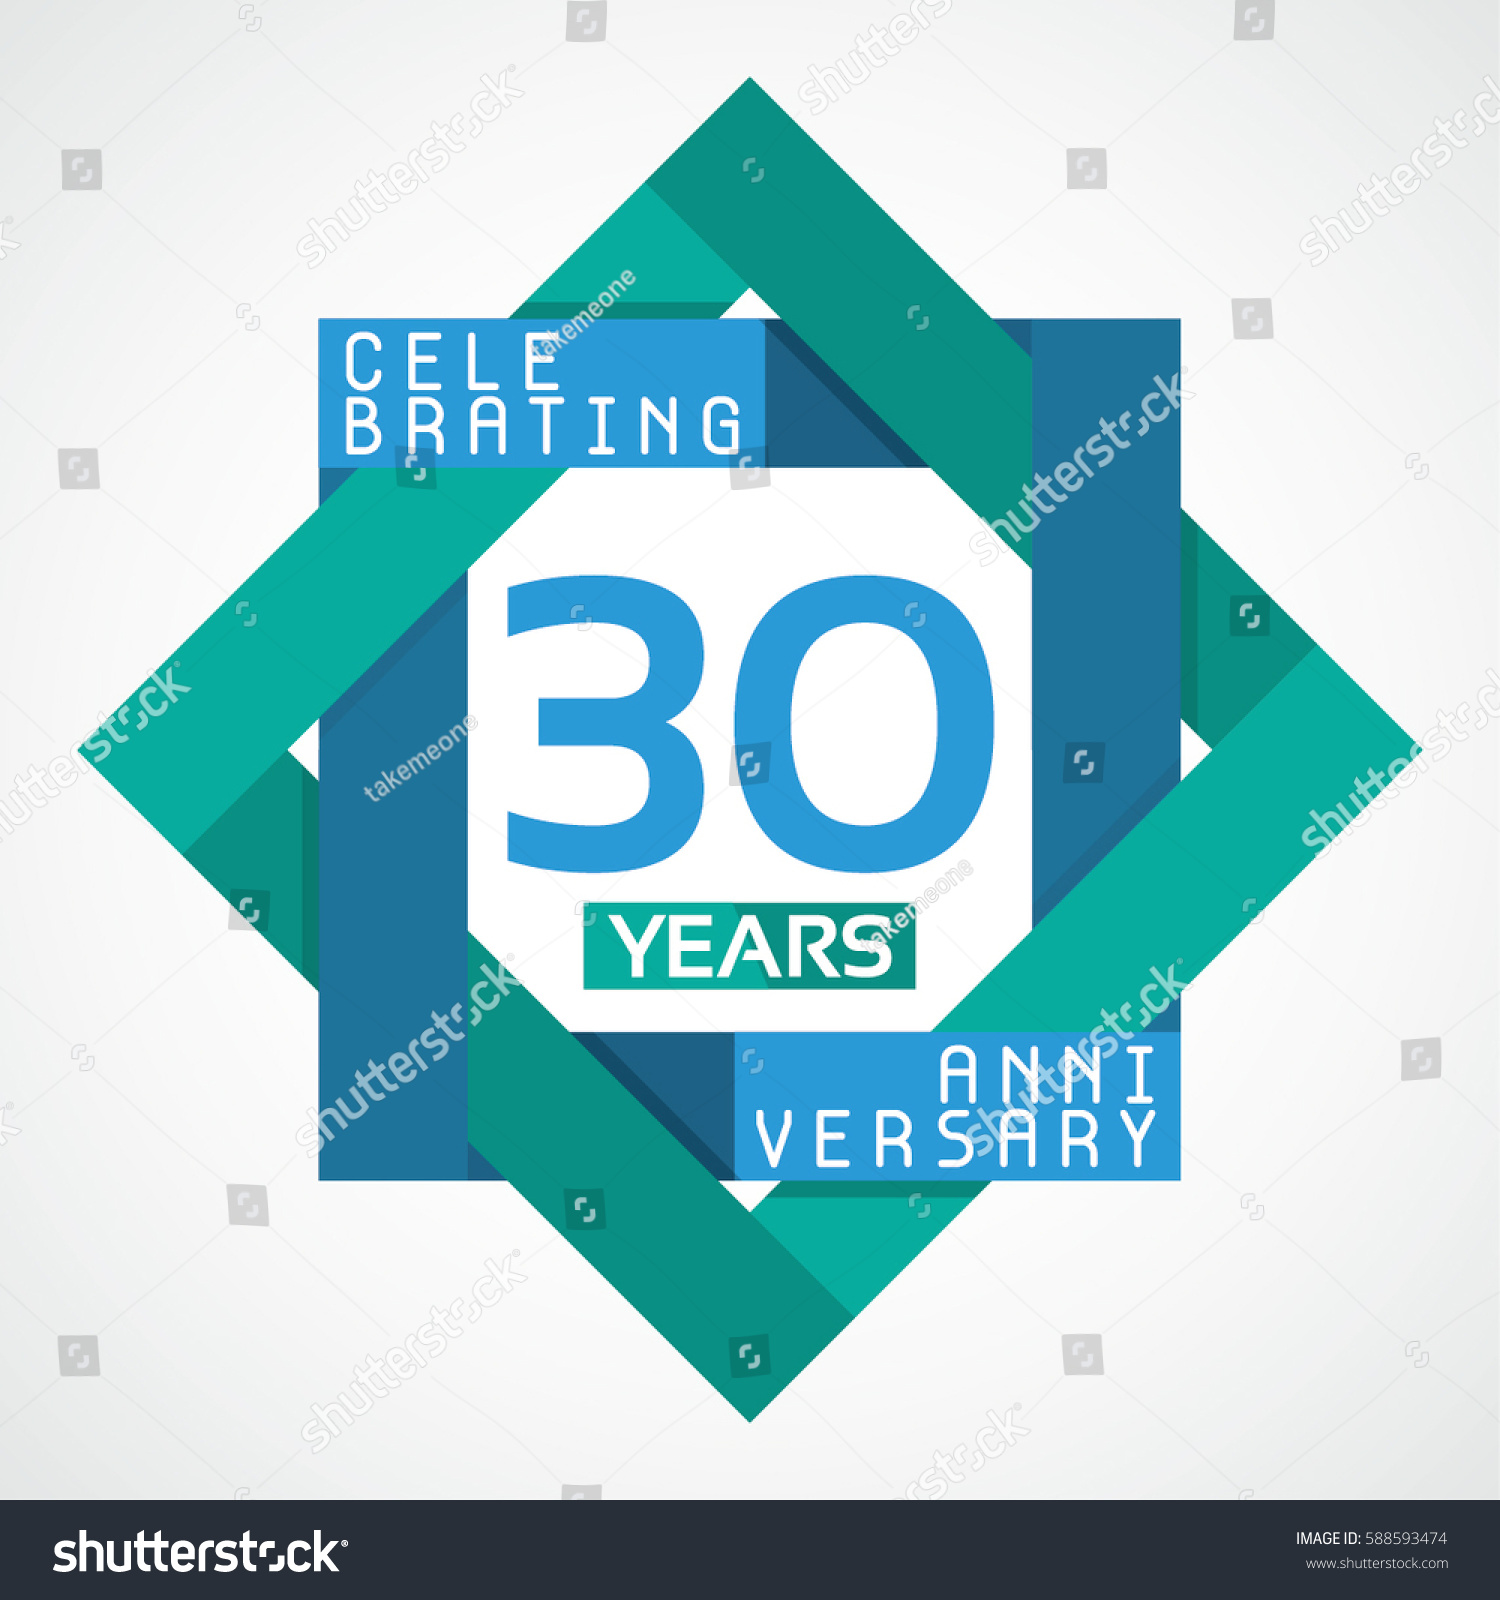 SVG of 30 Years Anniversary Celebration Design.
 svg